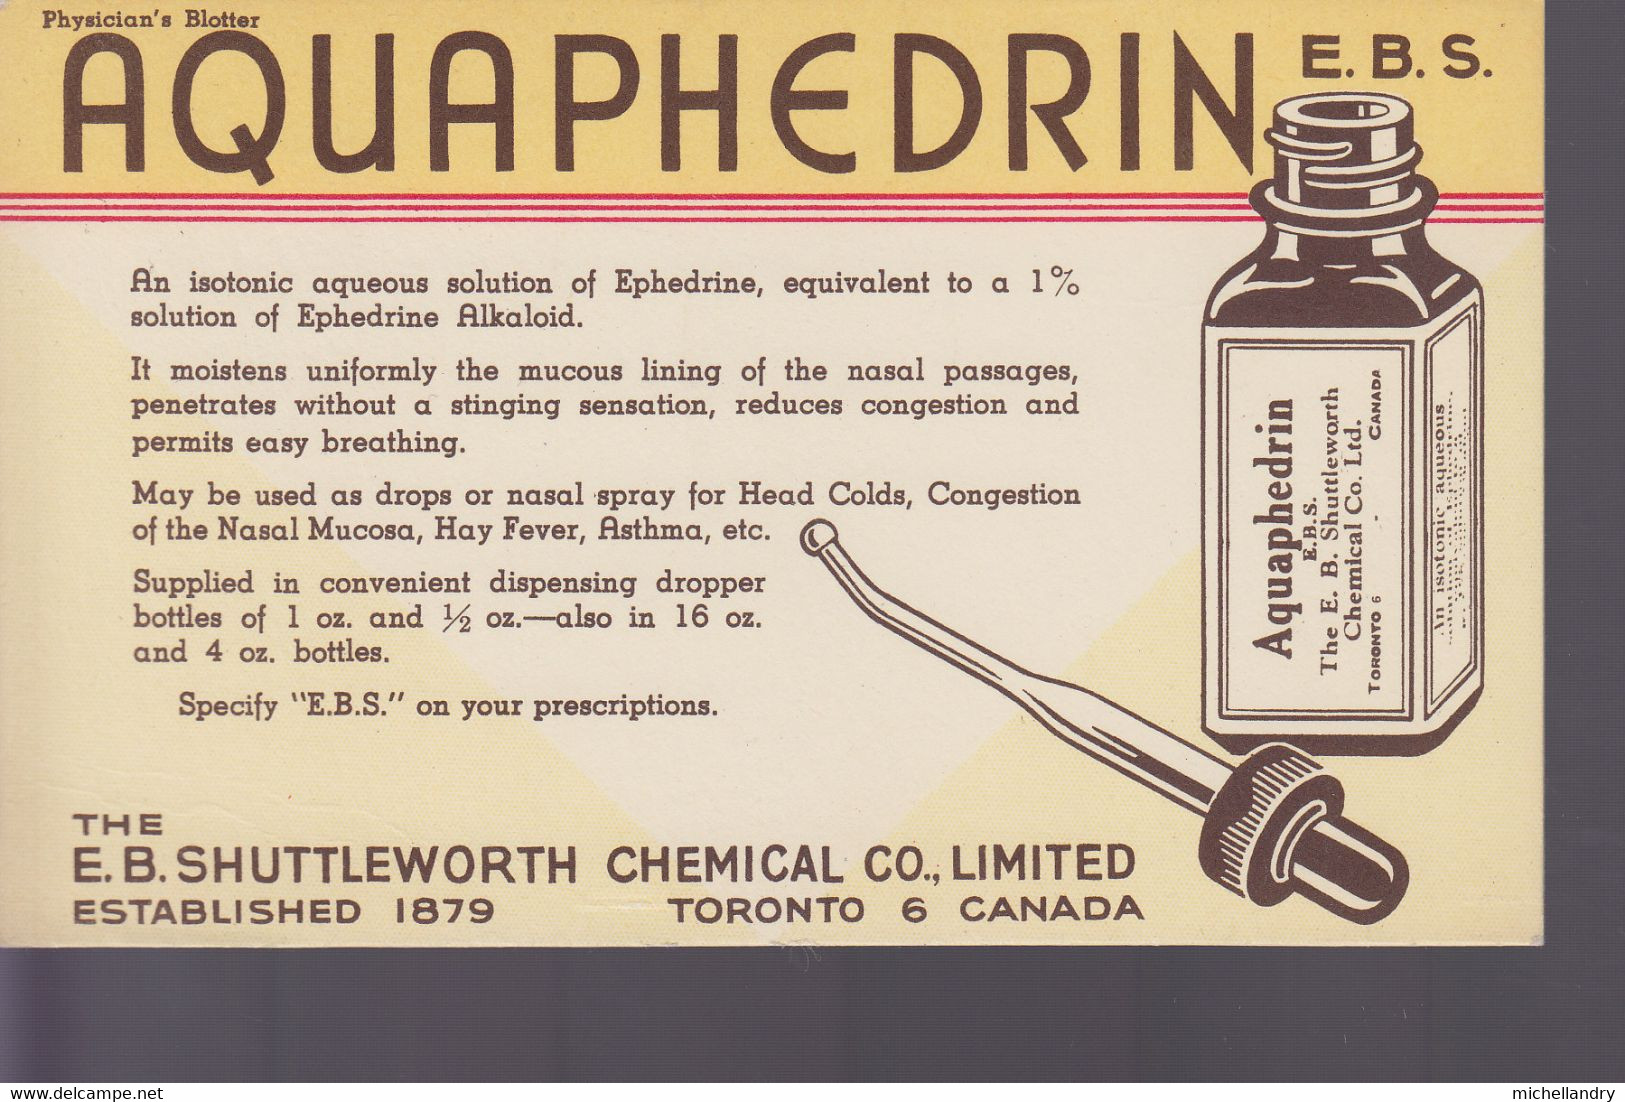 Pub (115915) Aquaphedrin E.B.S. The E.B.Shuttleworth Chemical Co Limited, Established 1879 Toronto 6 Canada - Pappschilder